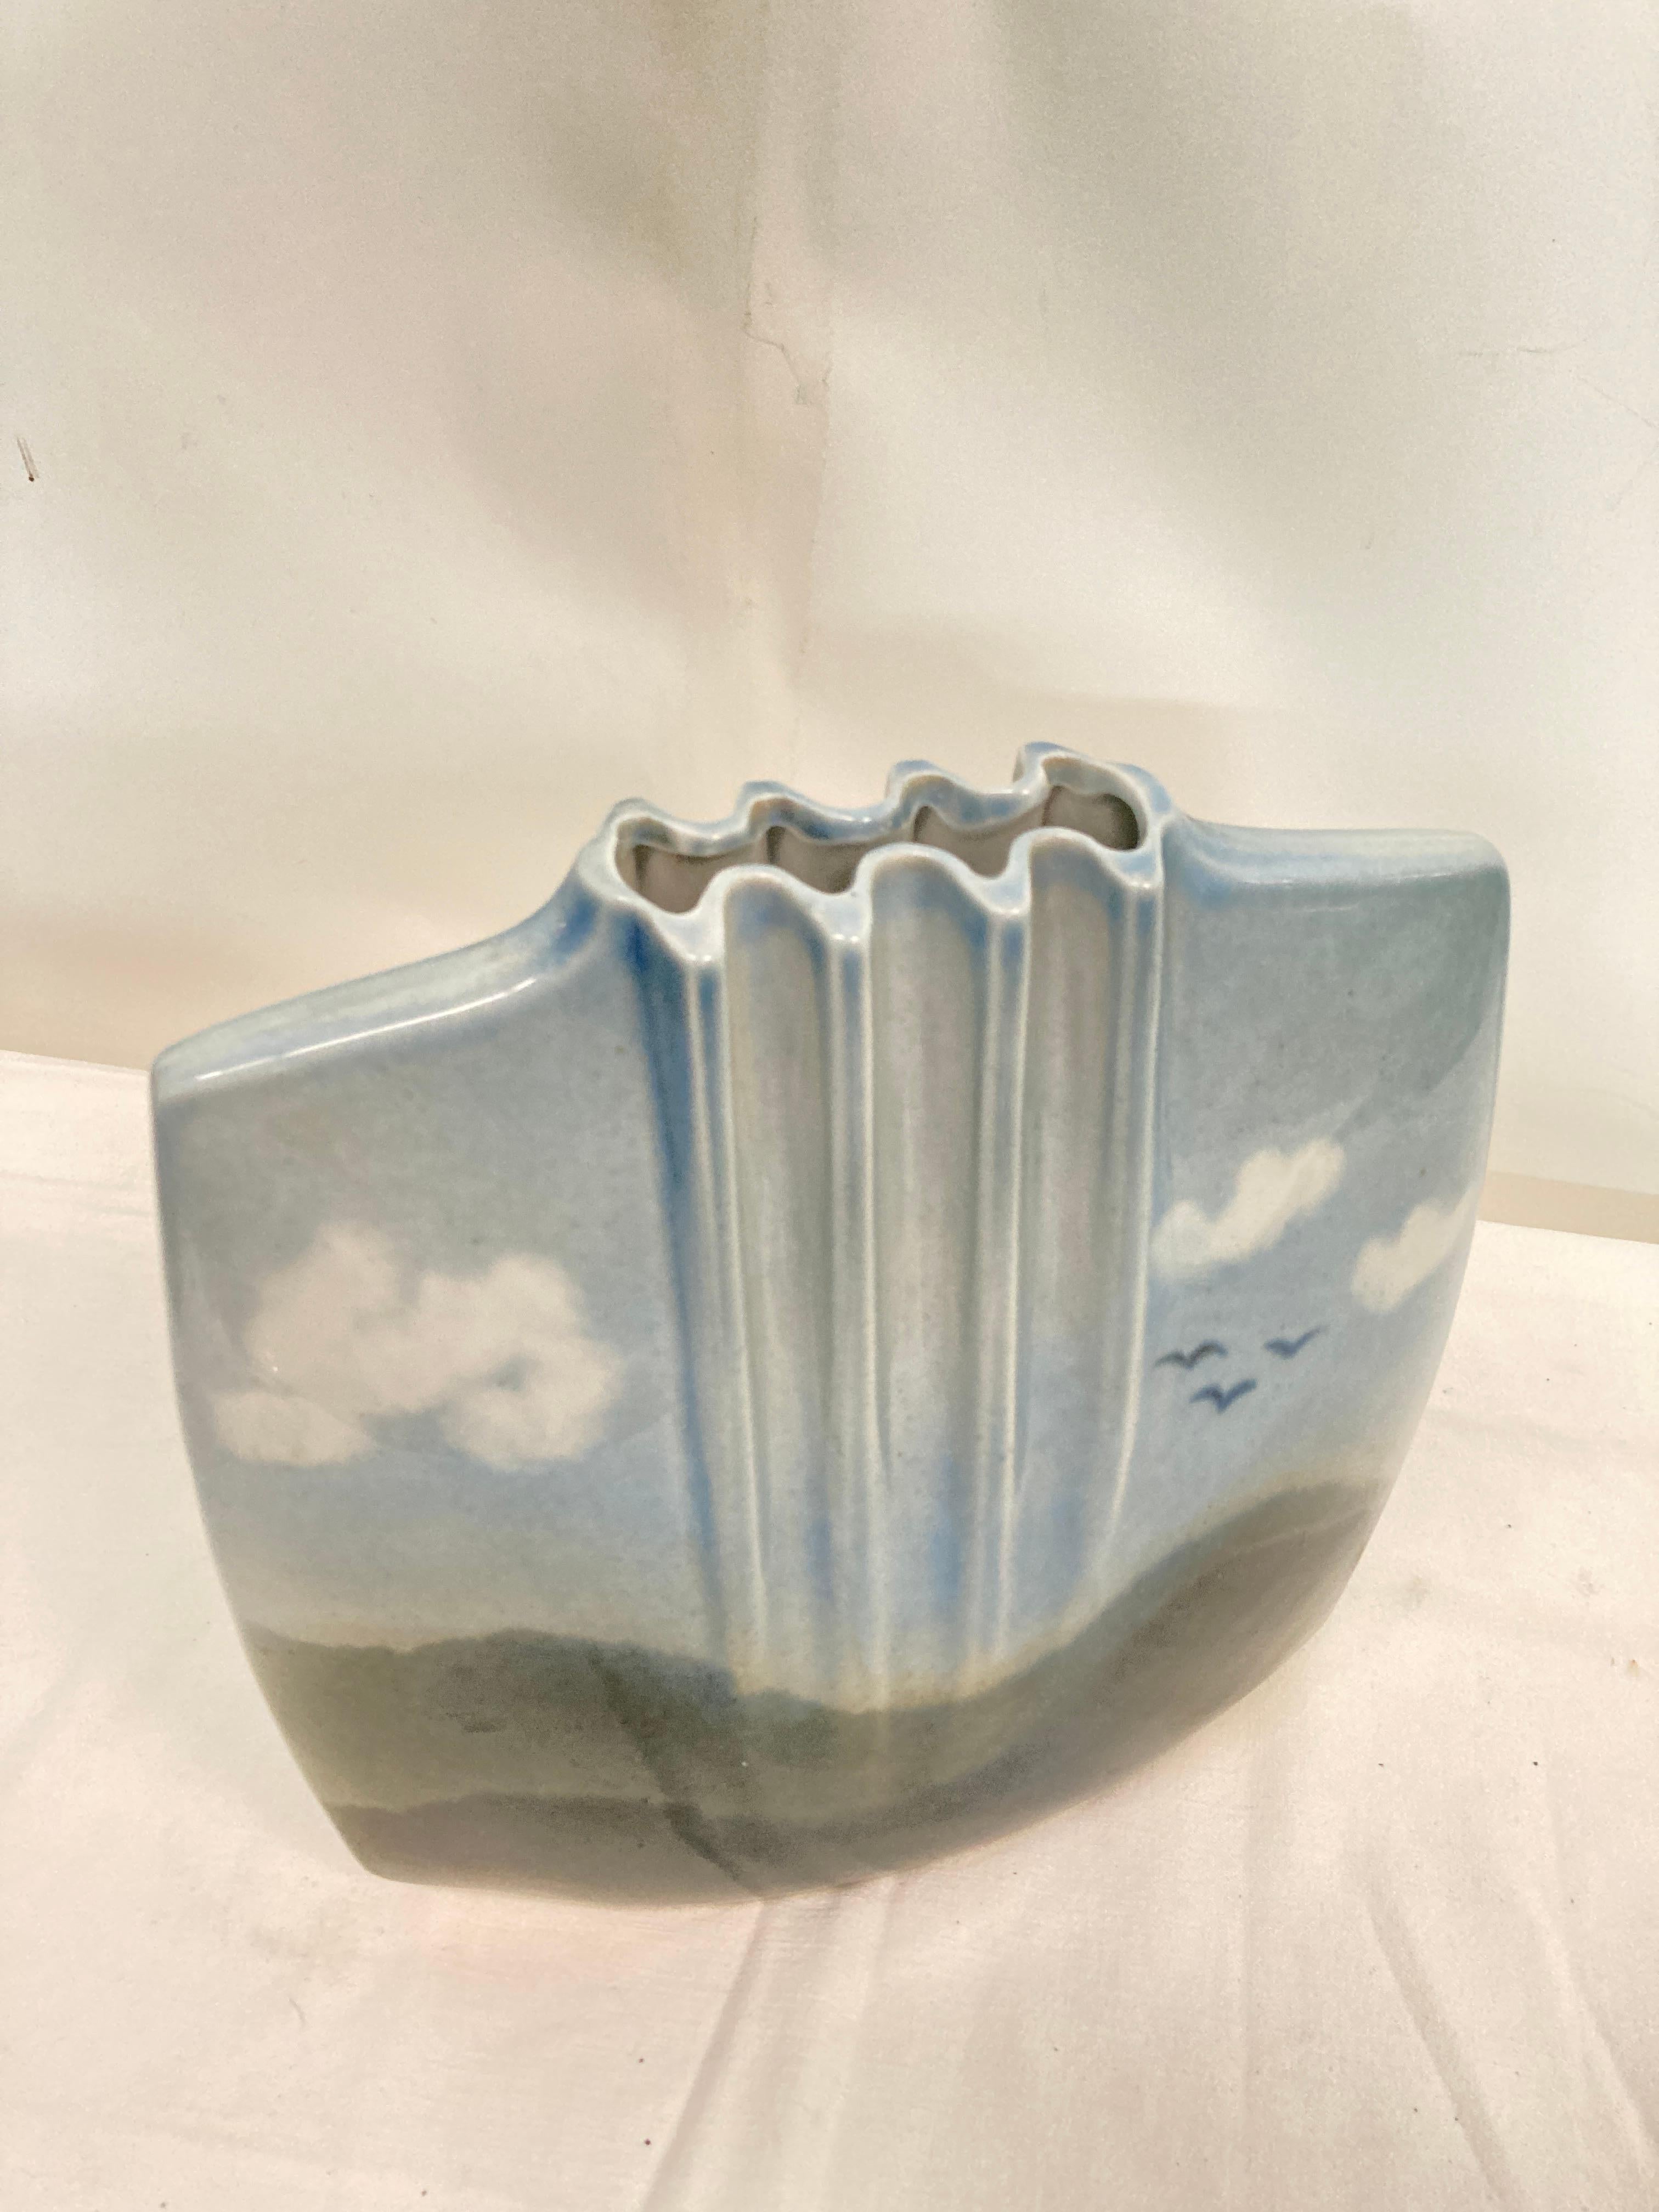 1970's porcelain vase by French factory Virebent 
Nice shape
